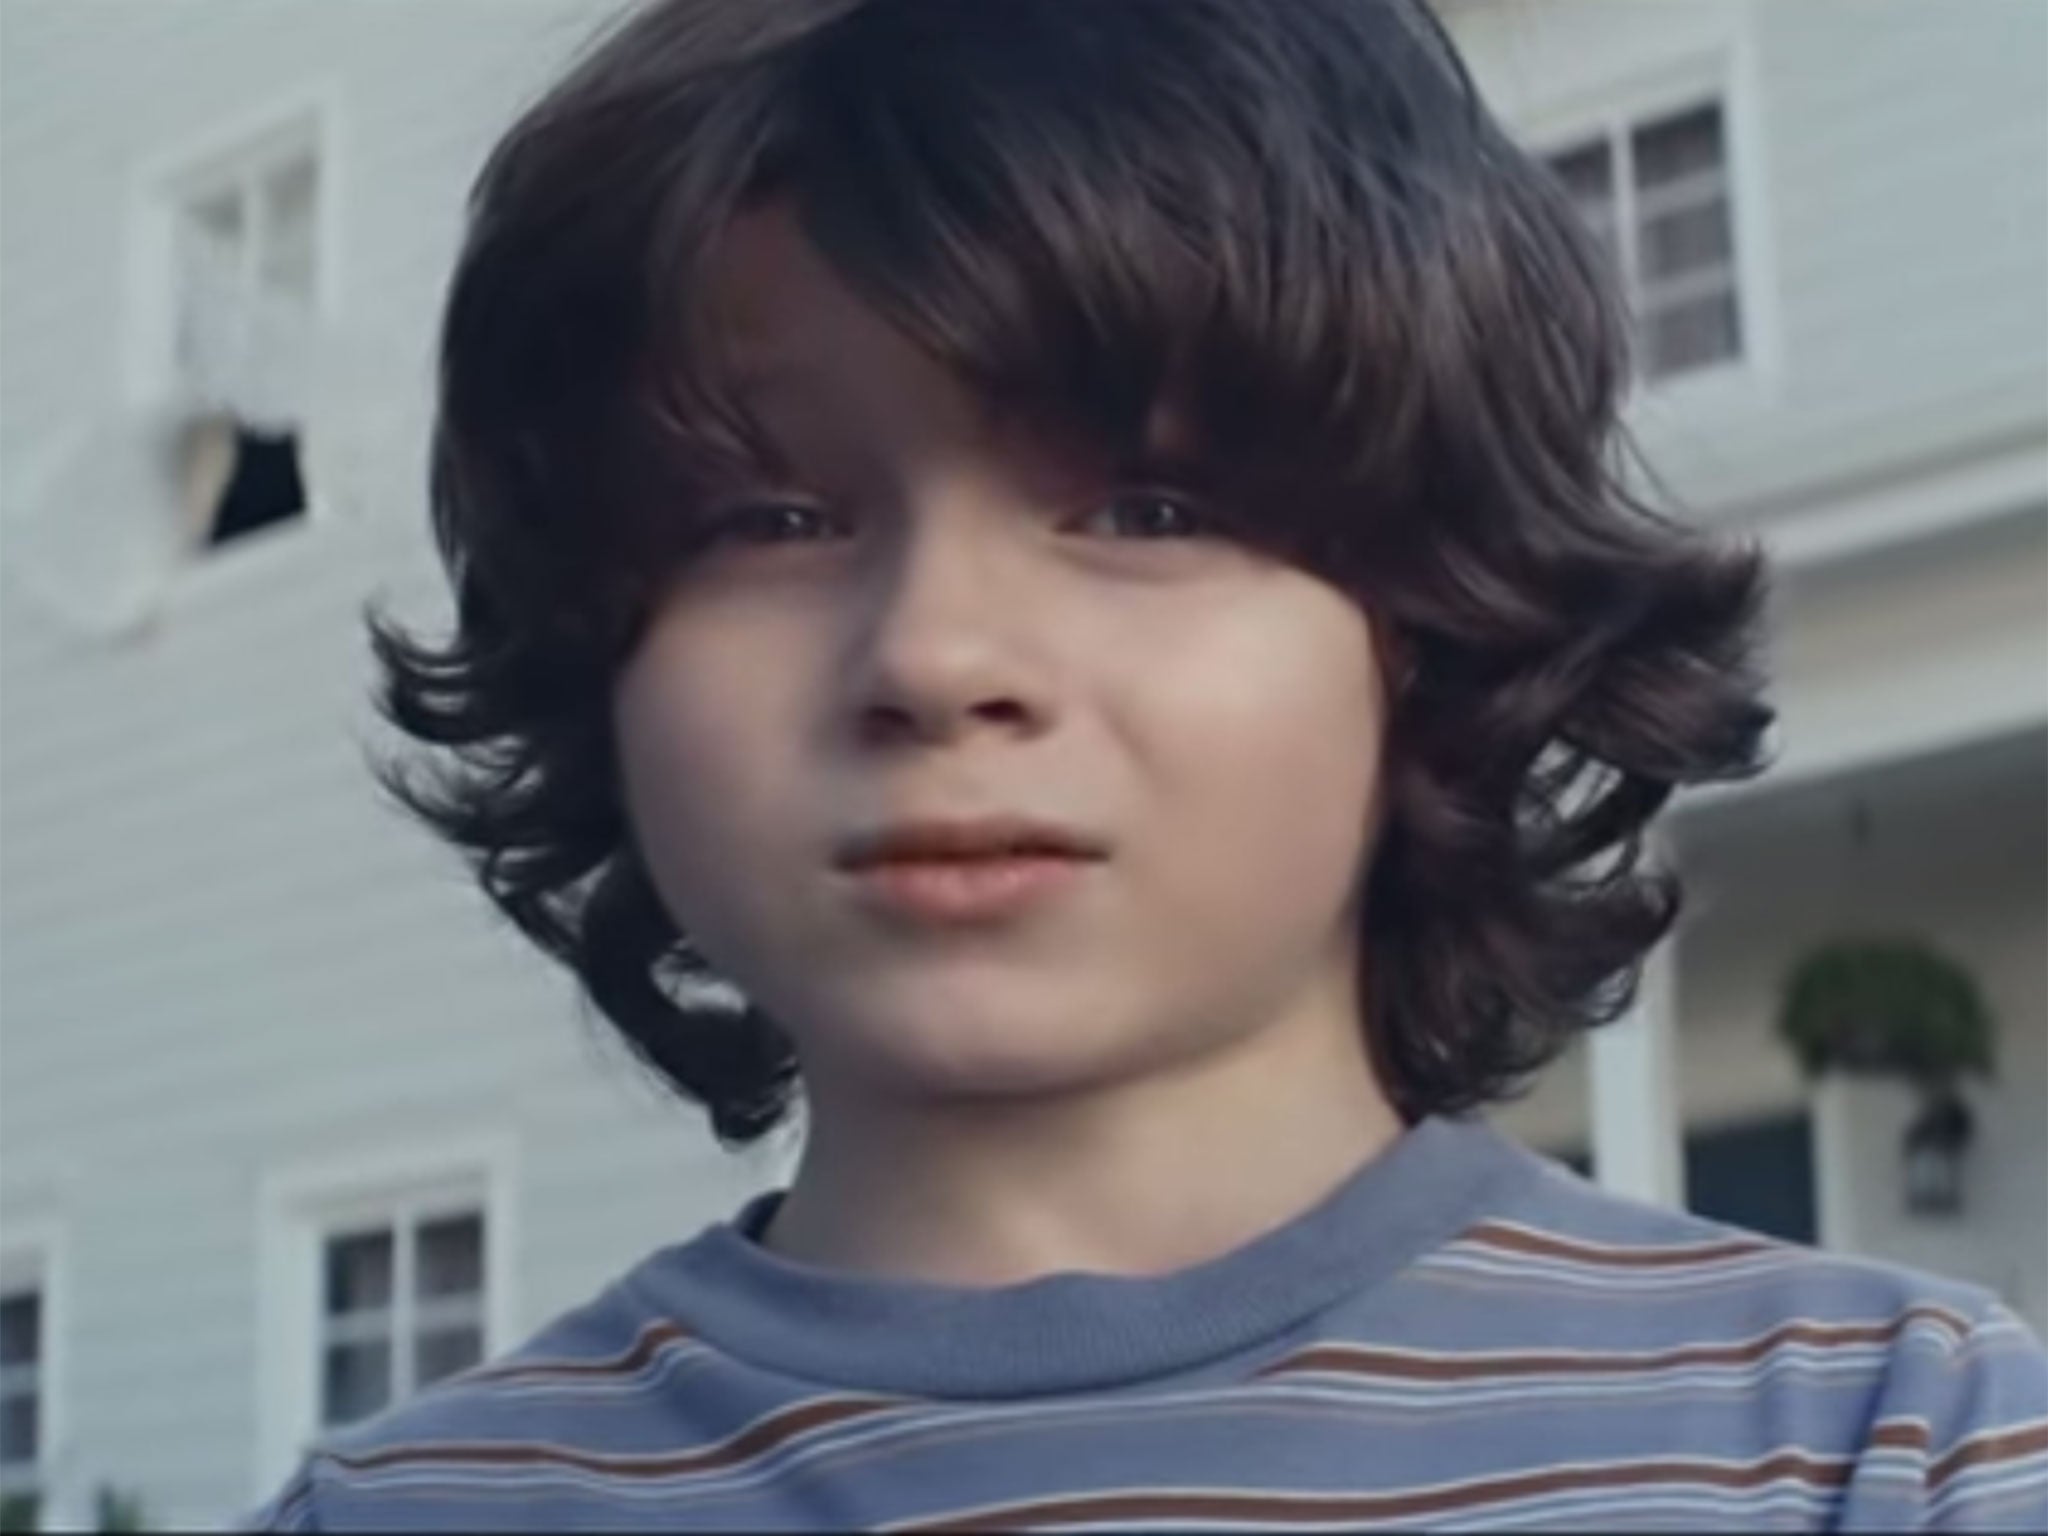 Nationwide's Super Bowl ad featured a dead little boy